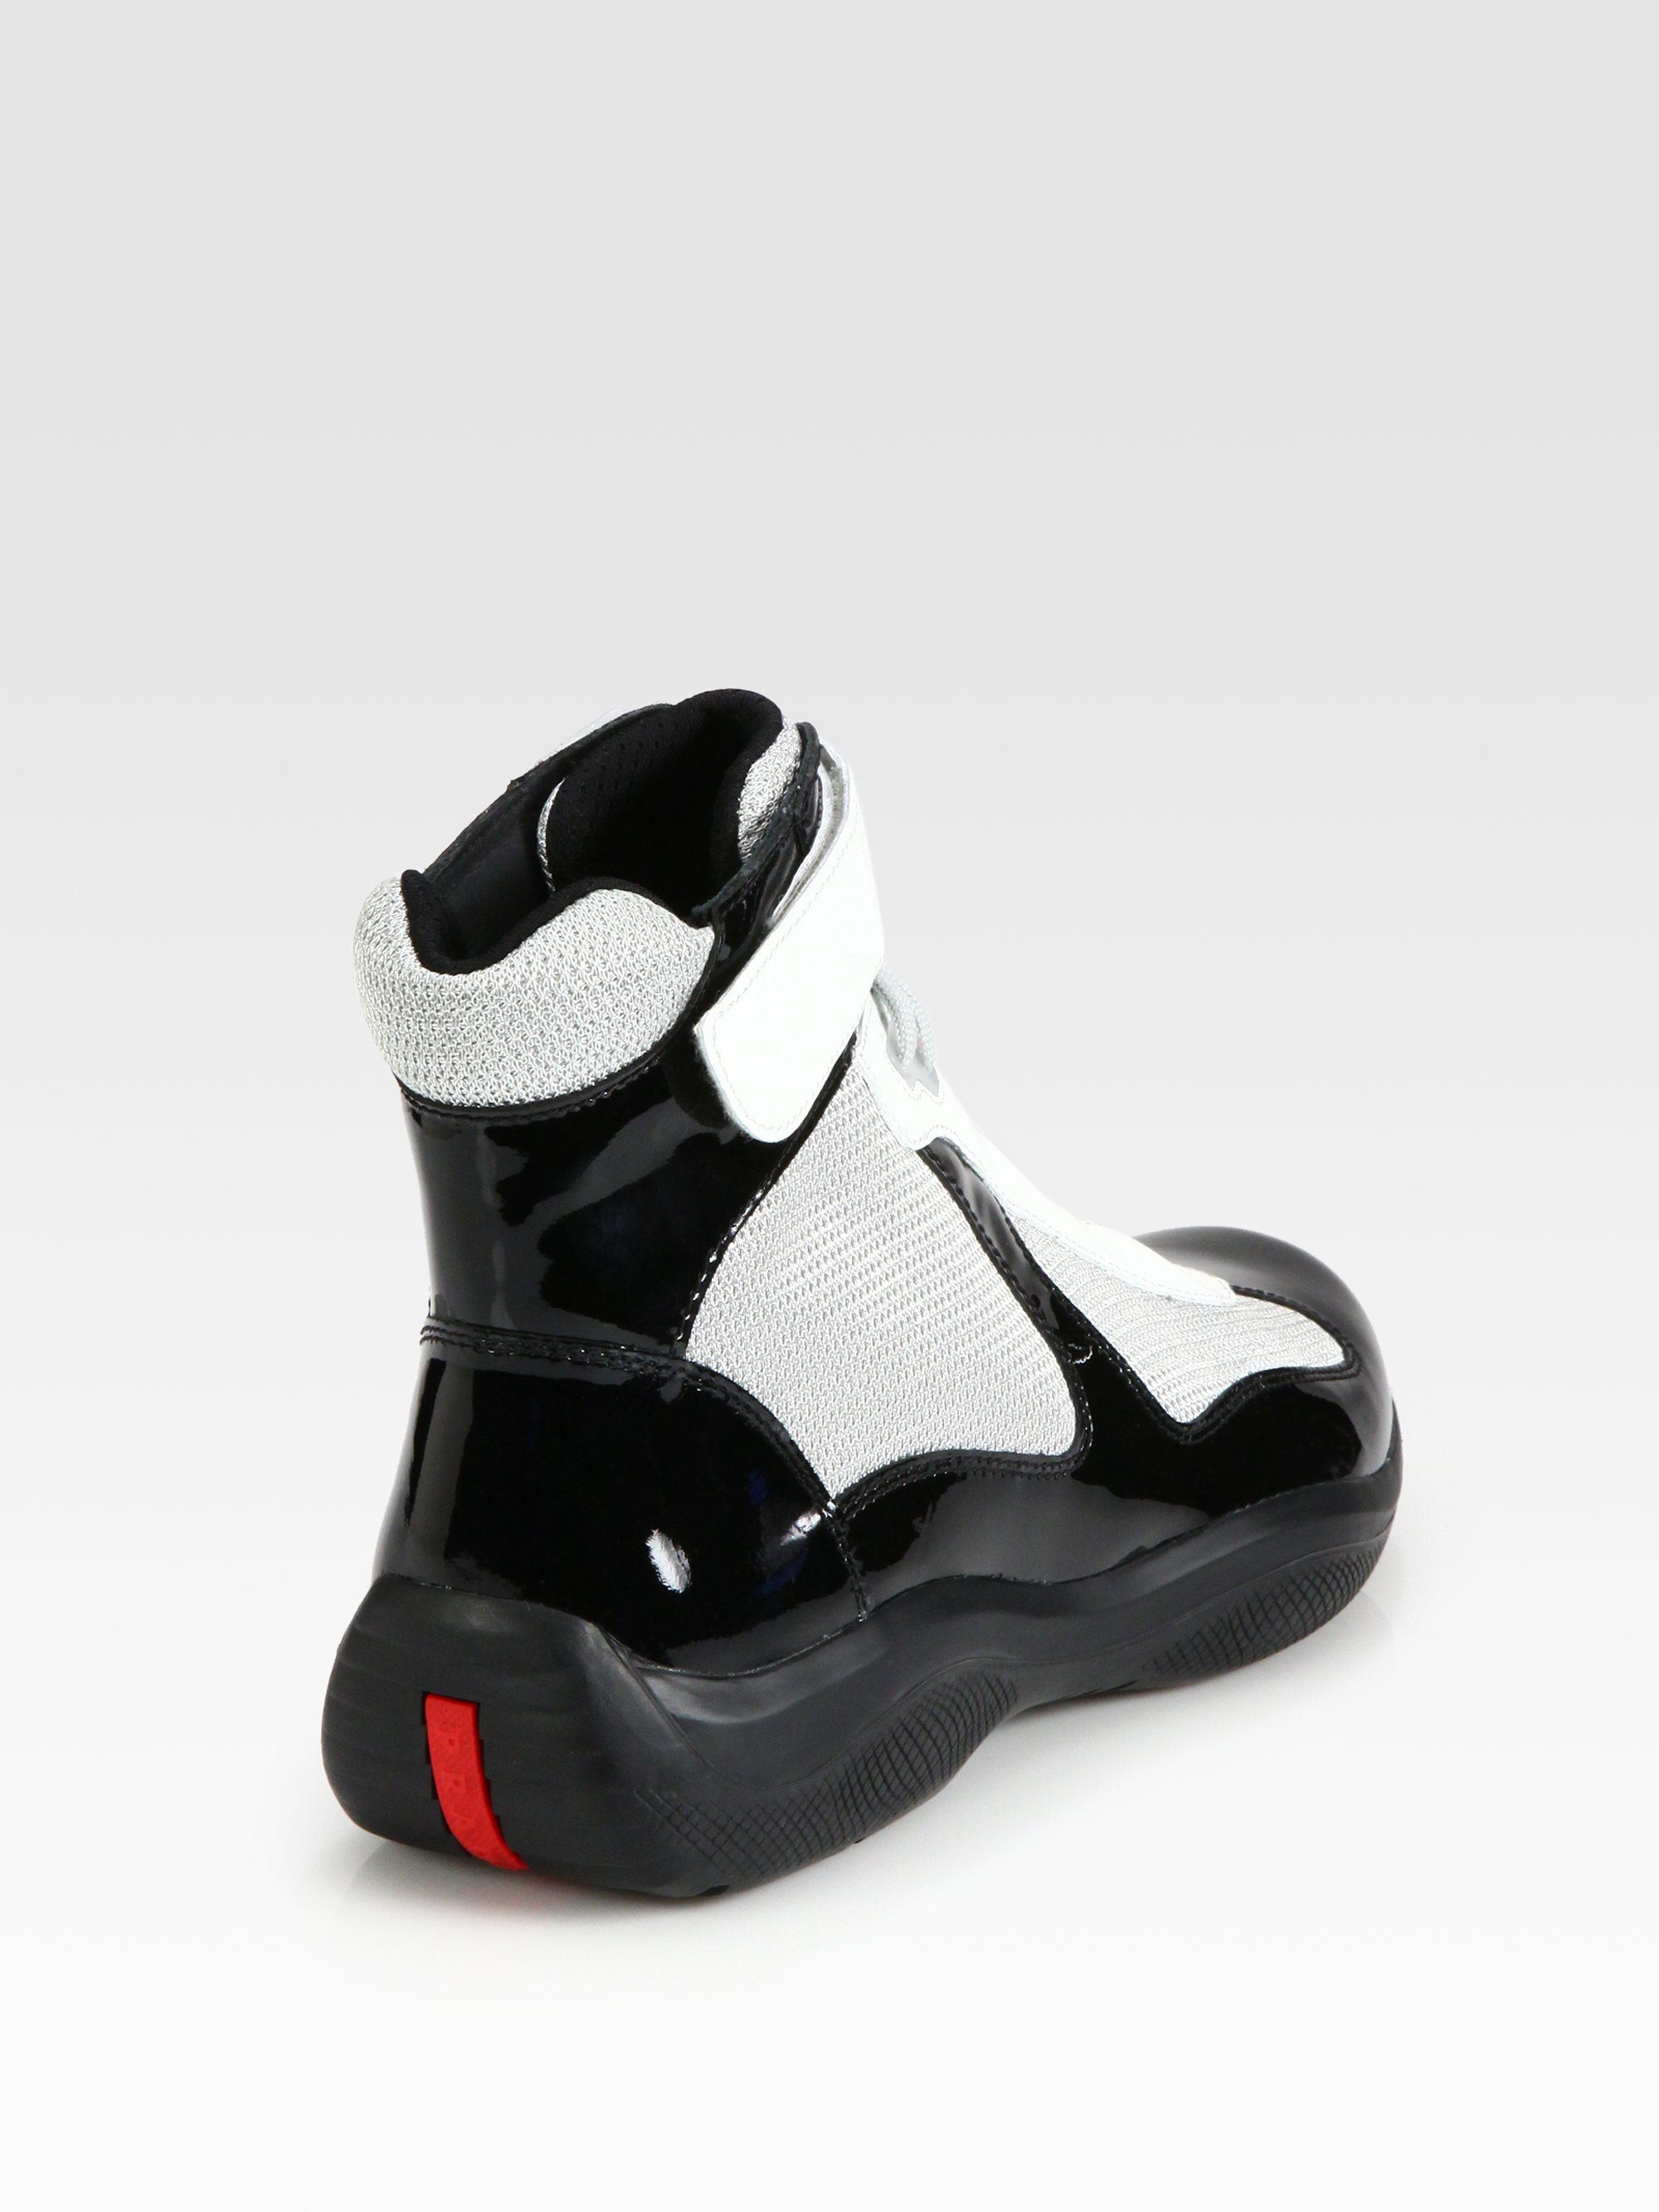 Prada Hightop Patent Sneakers in Black-White (White) - Lyst